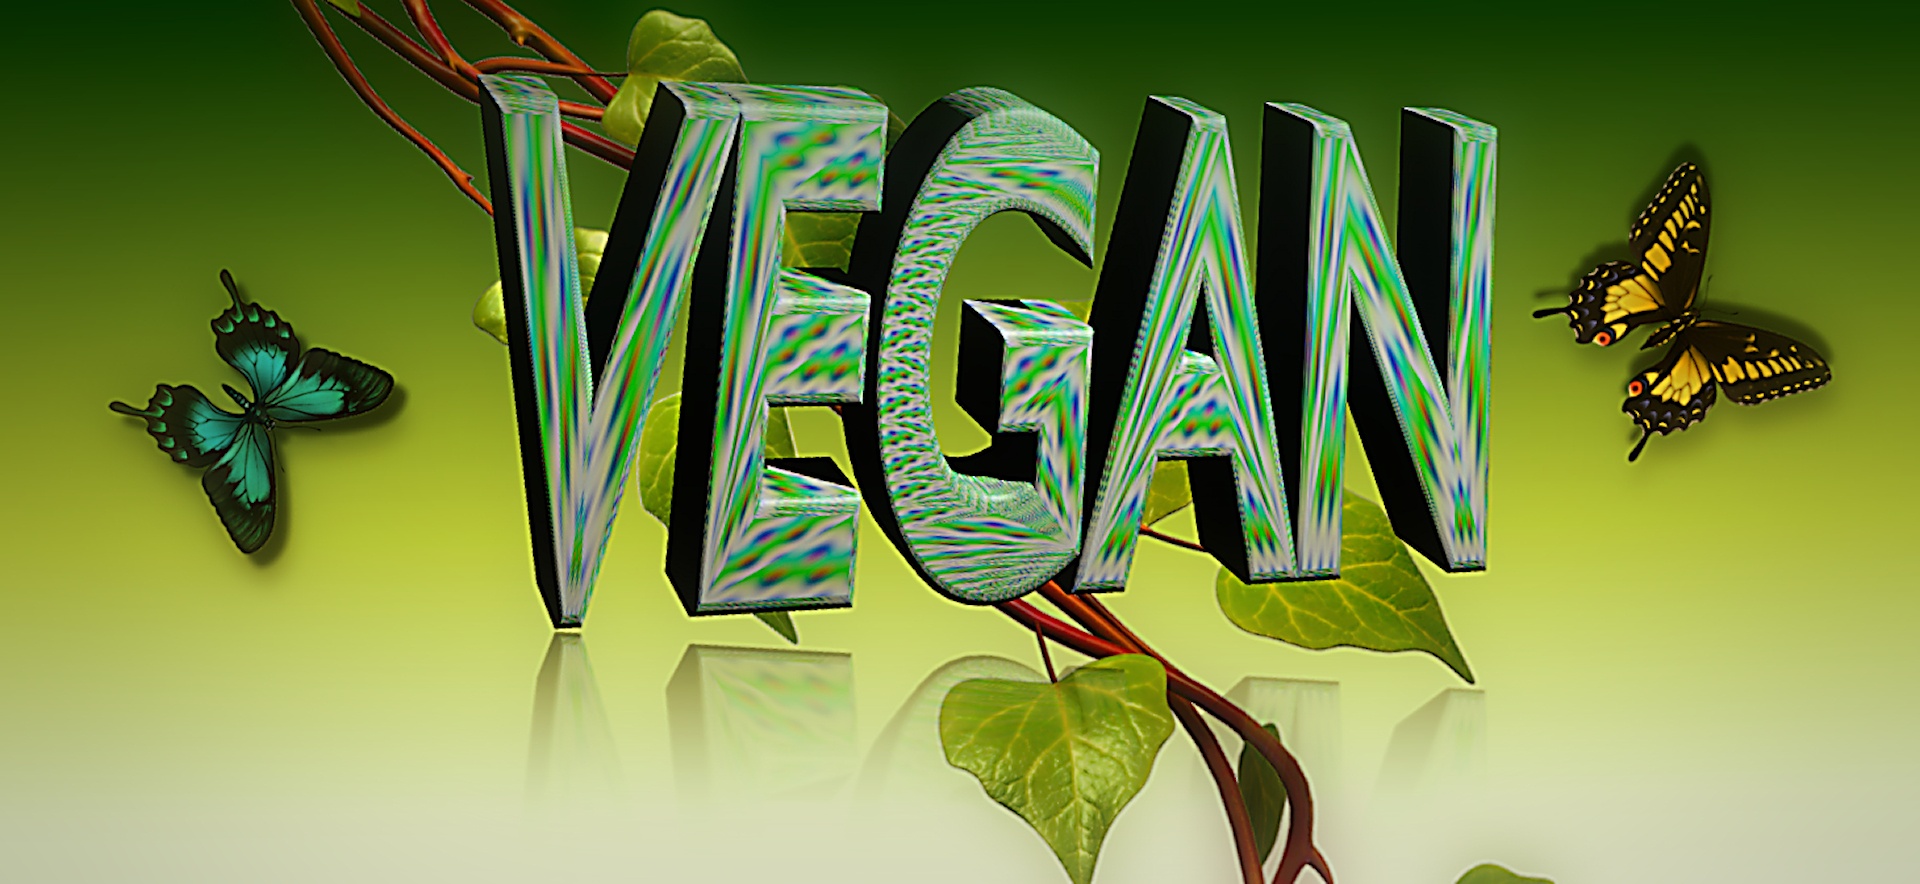 vegan green diet free photo